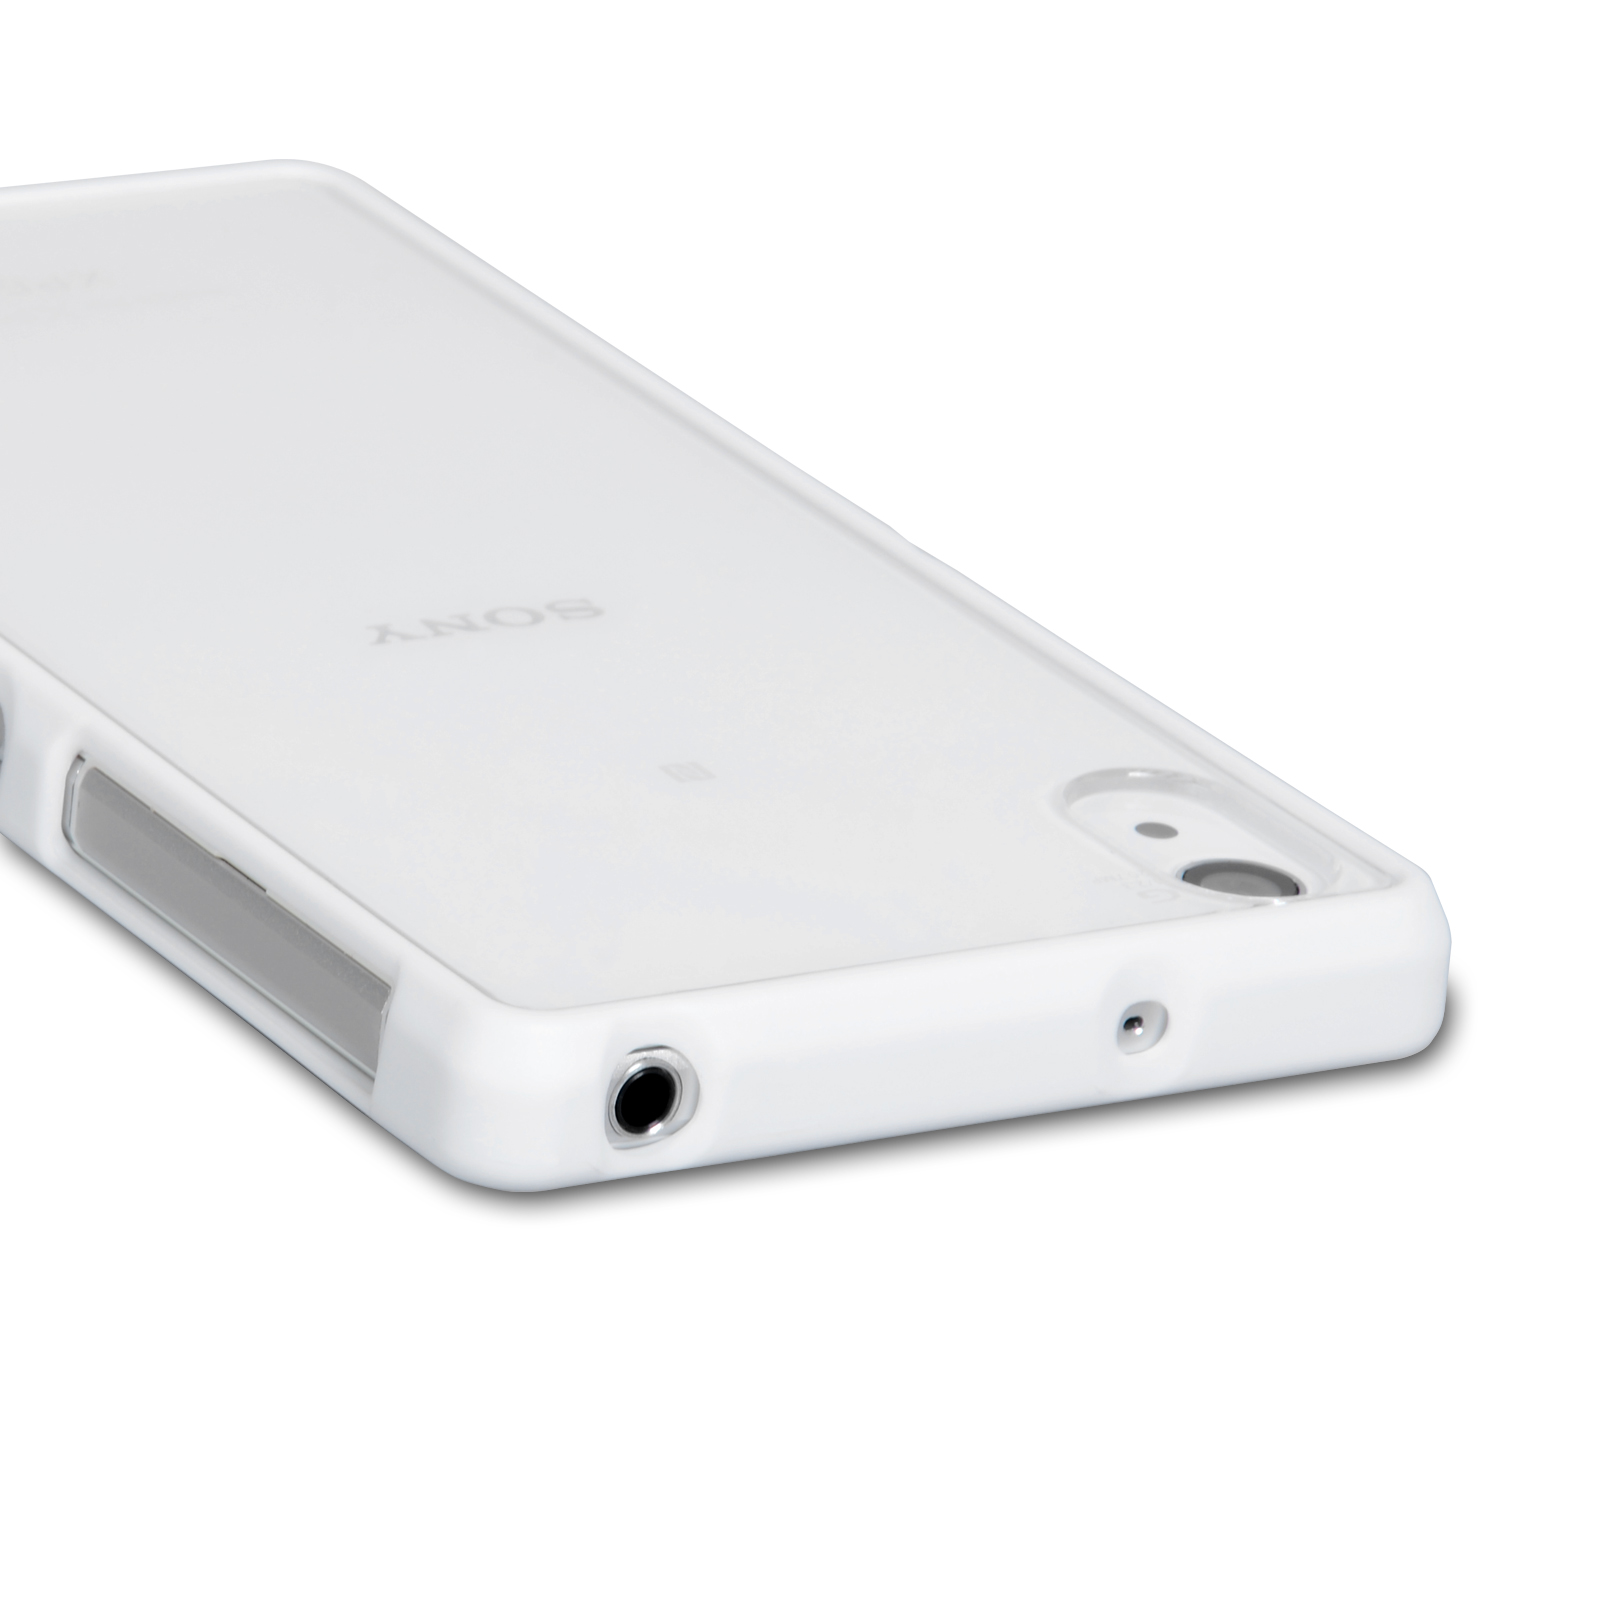 Roxfit Rubber Hard Case for Sony Xperia Z2 - Polar White